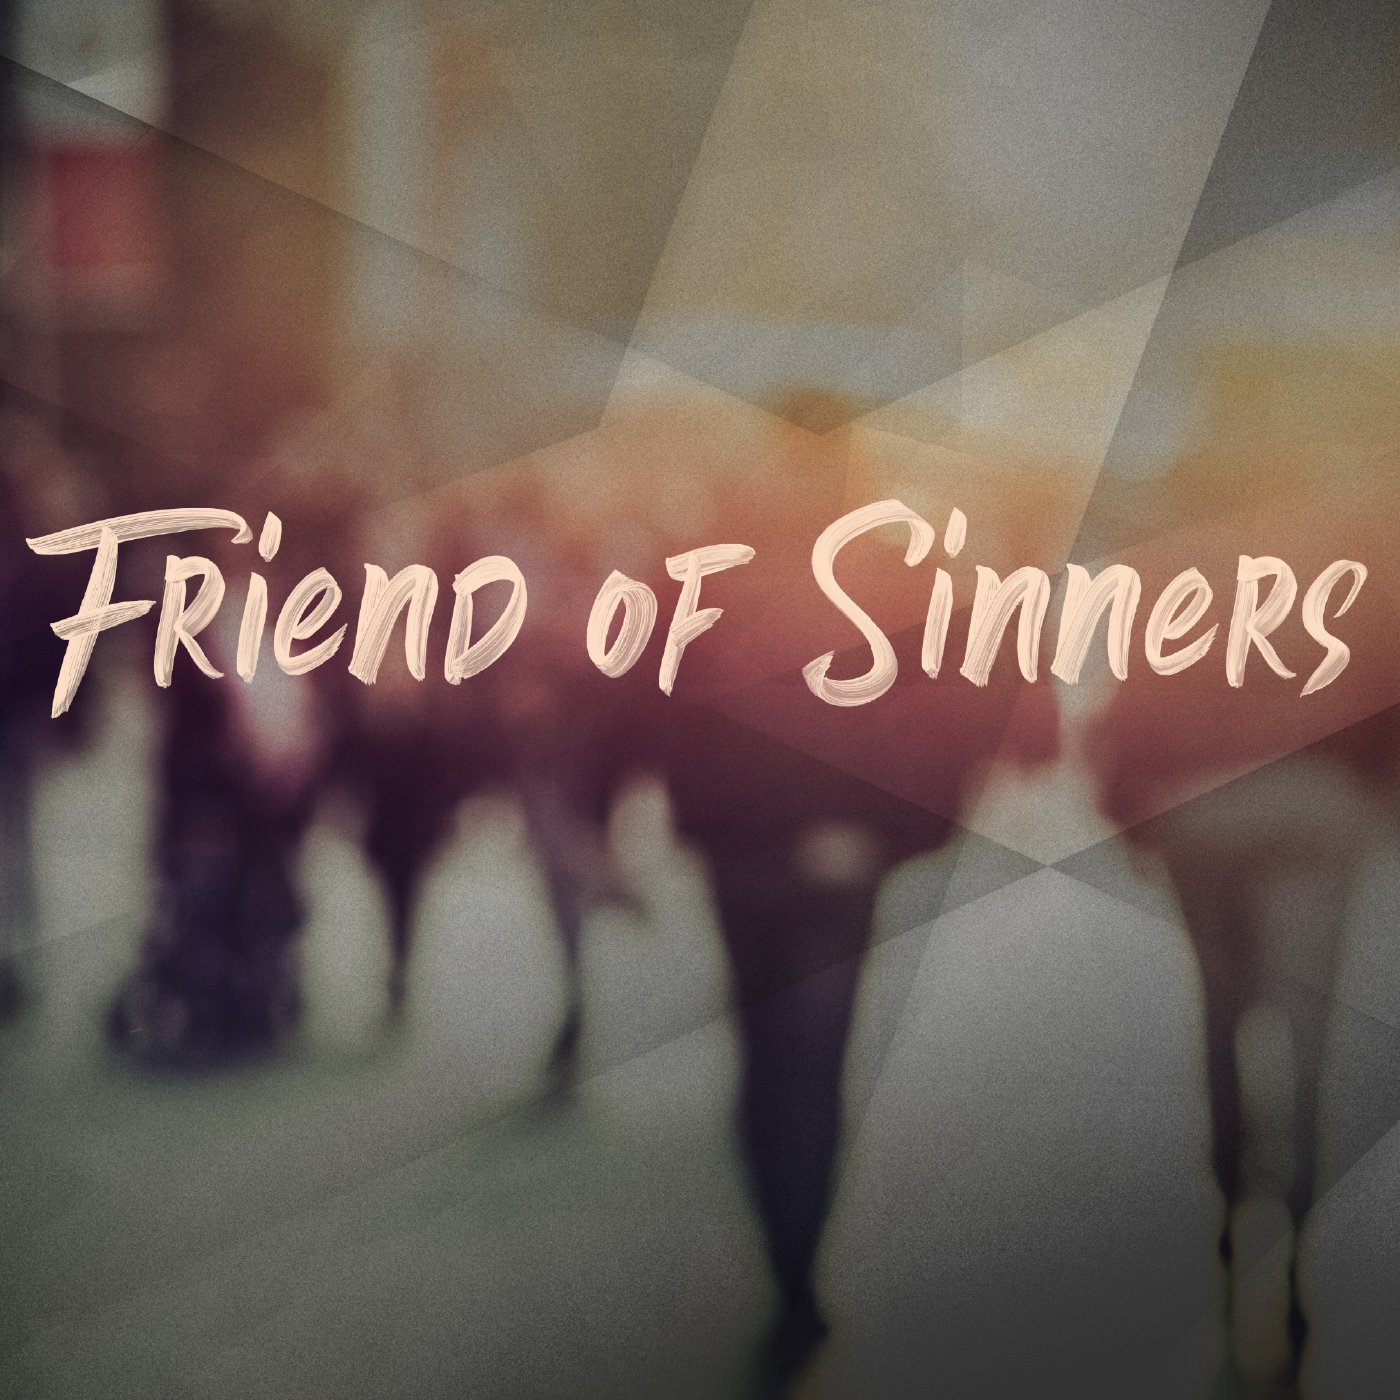 Friend of Sinners, Part 4